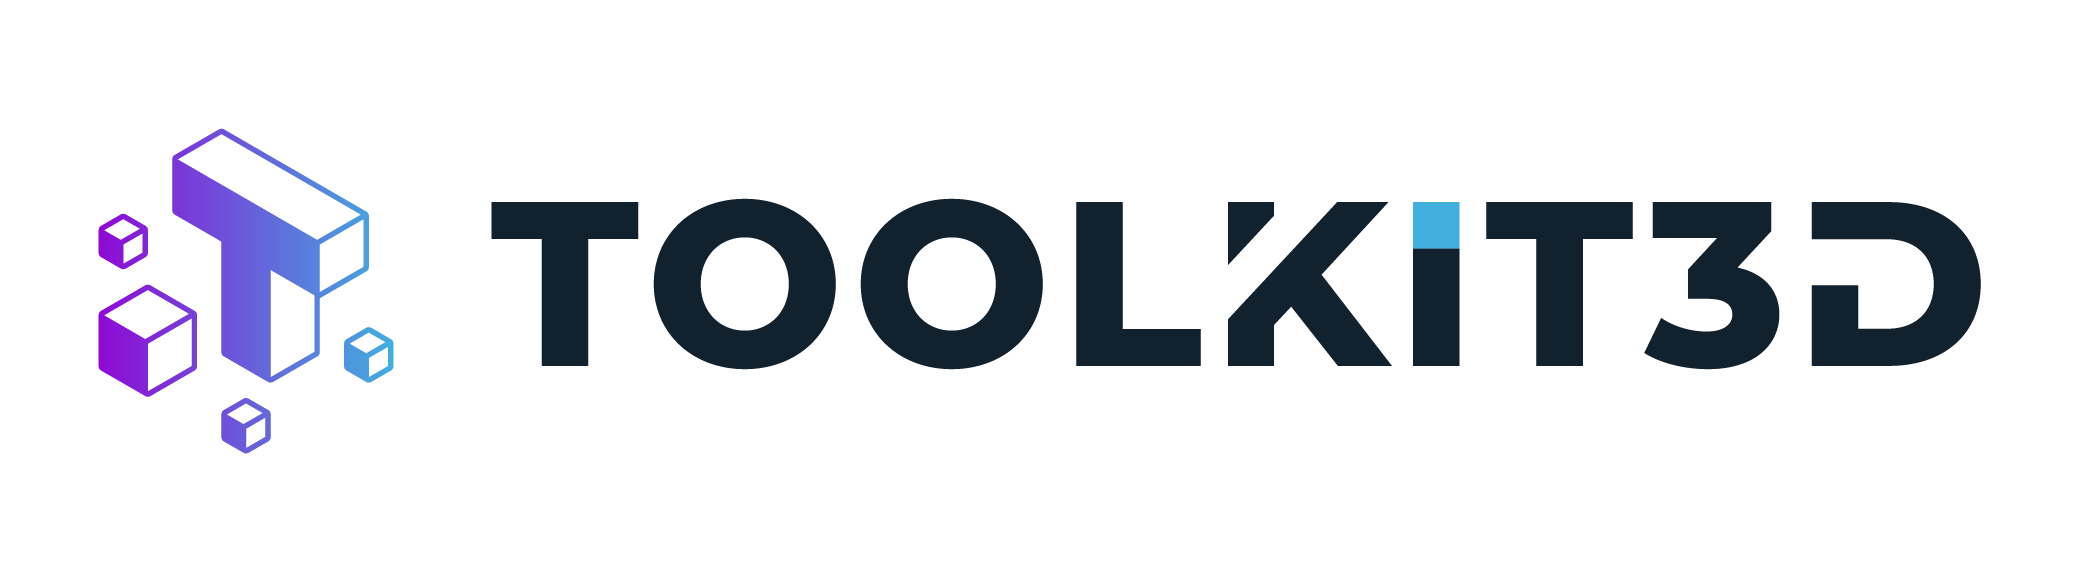 Shapemakers partner Toolkit3D